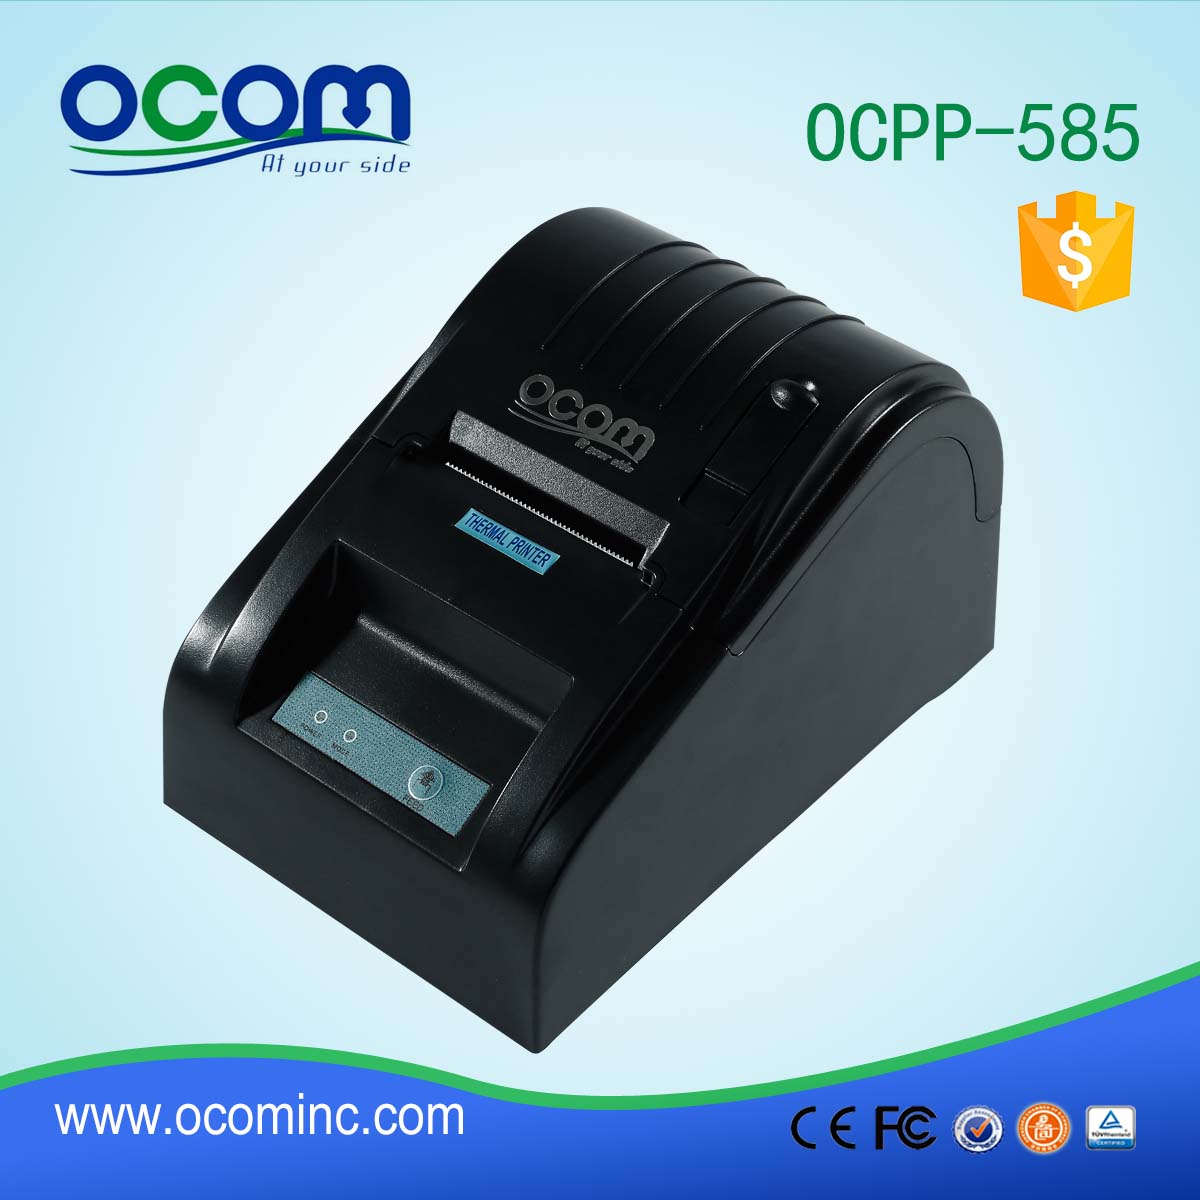 OCPP-585 58 χιλιοστών θερμικό εκτυπωτή παραλαβή με προαιρετικό Bluetooth